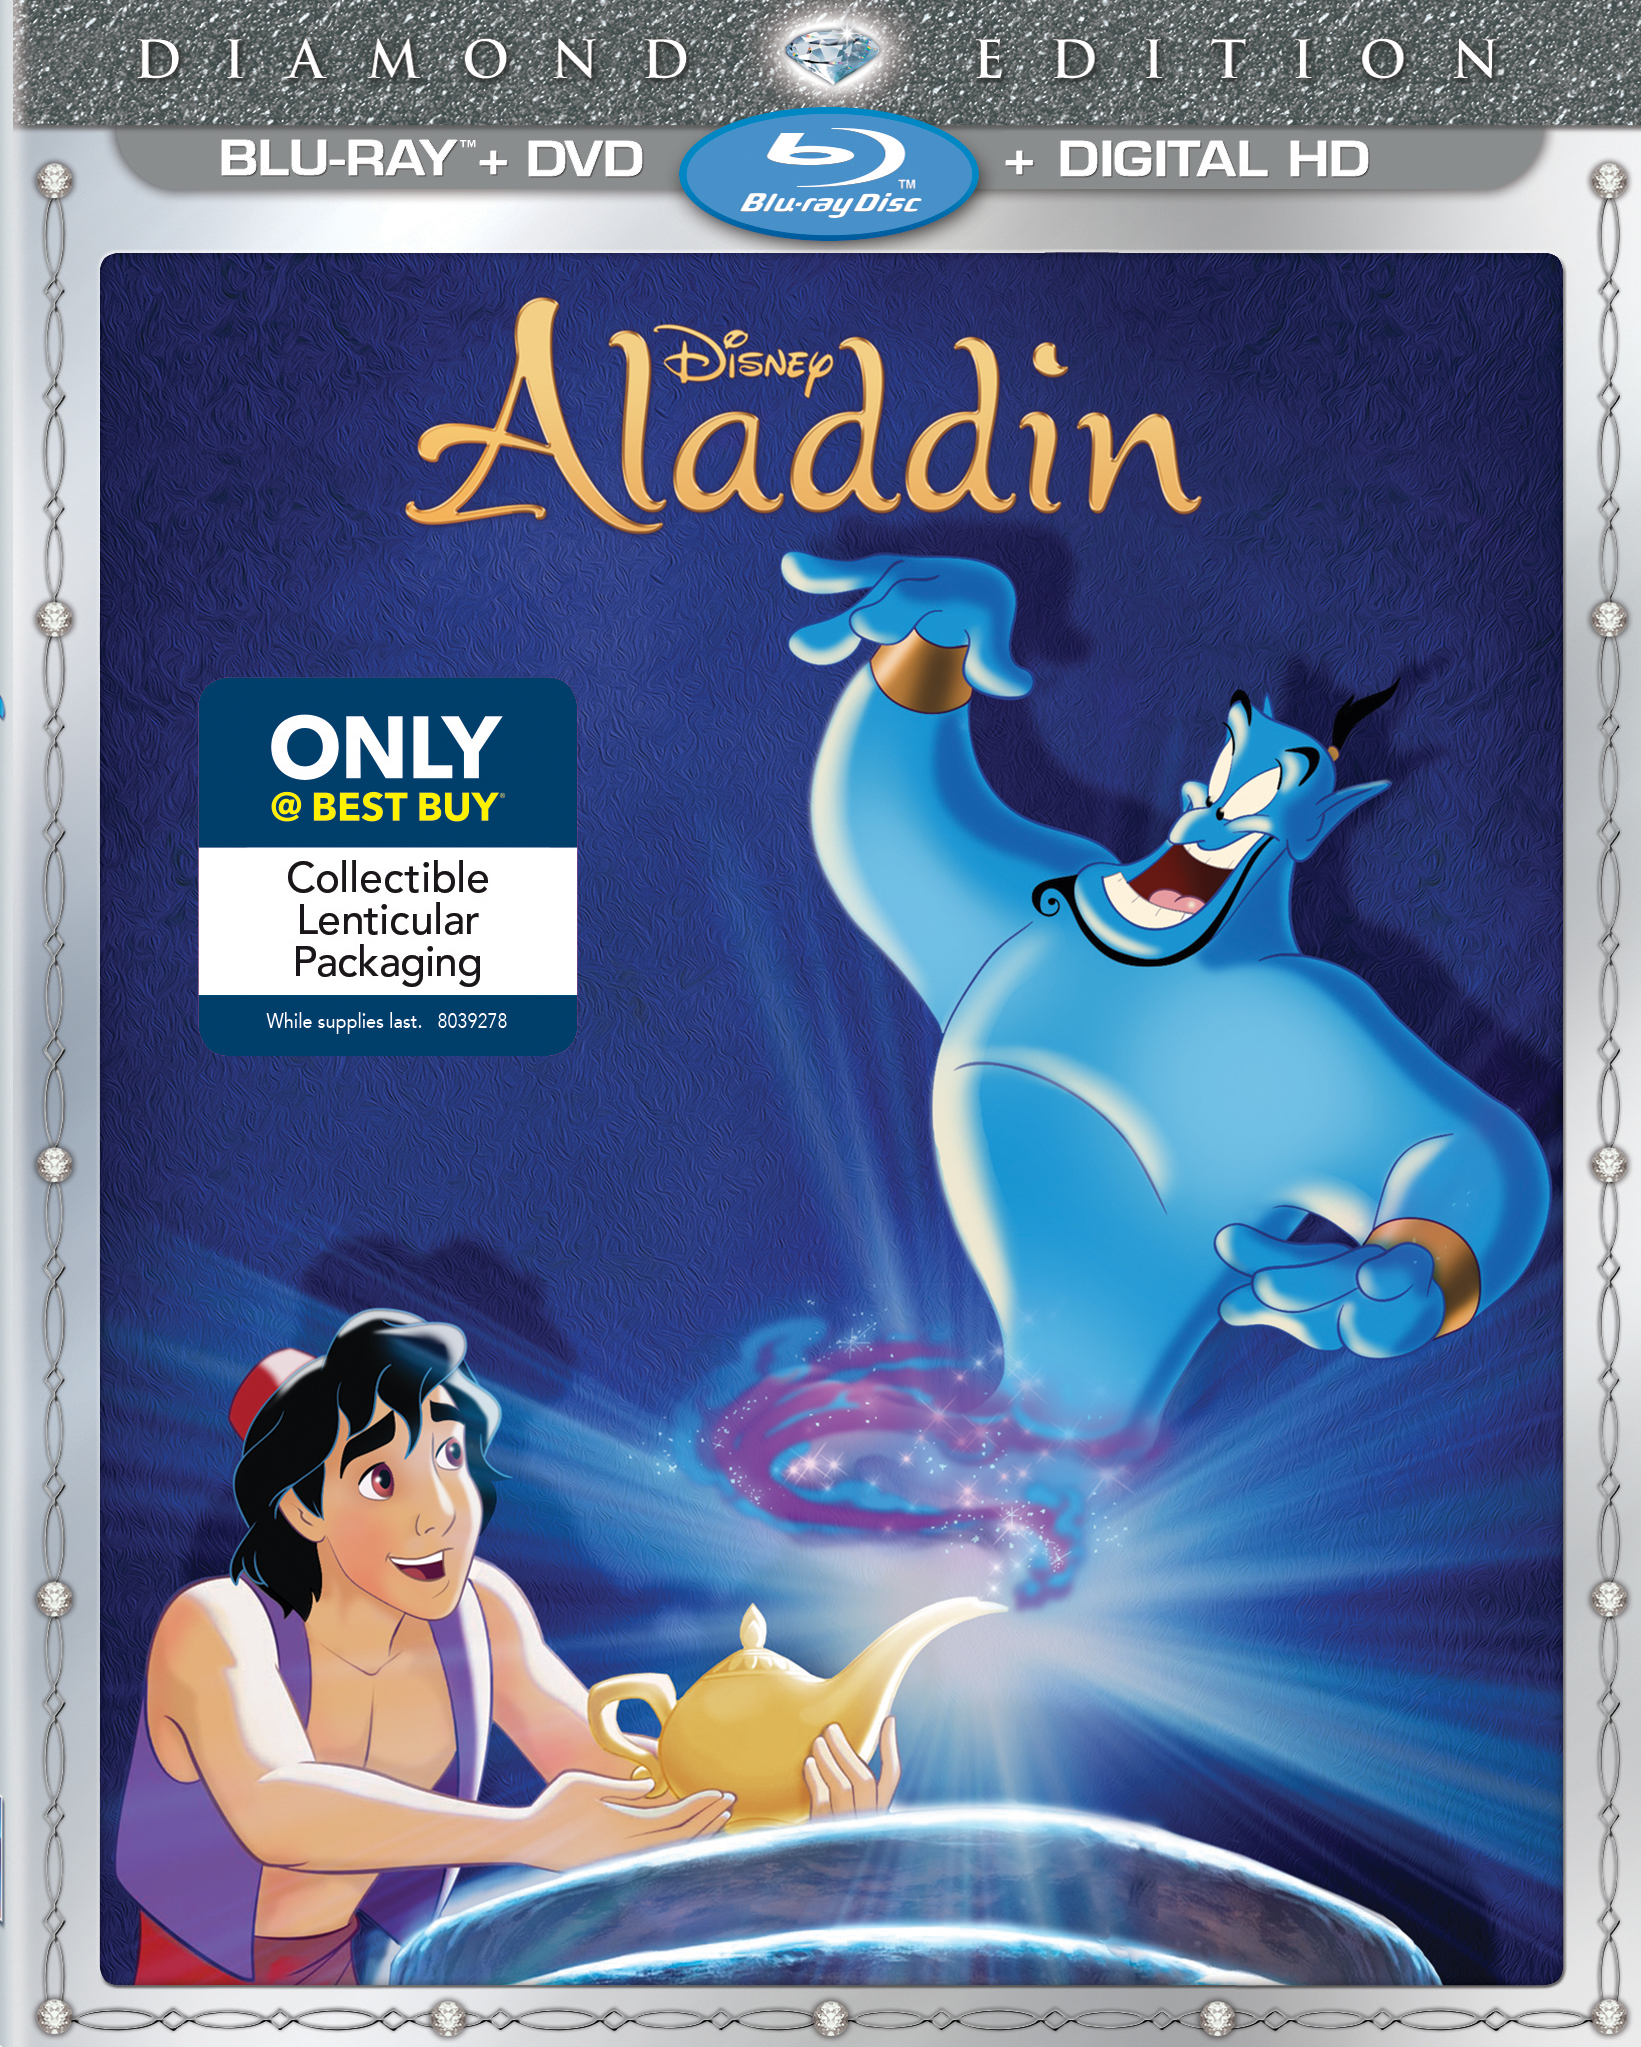 Best Buy Aladdin Diamond Edition Blu Ray Dvd Lenticular Packaging Only Best Buy 1992